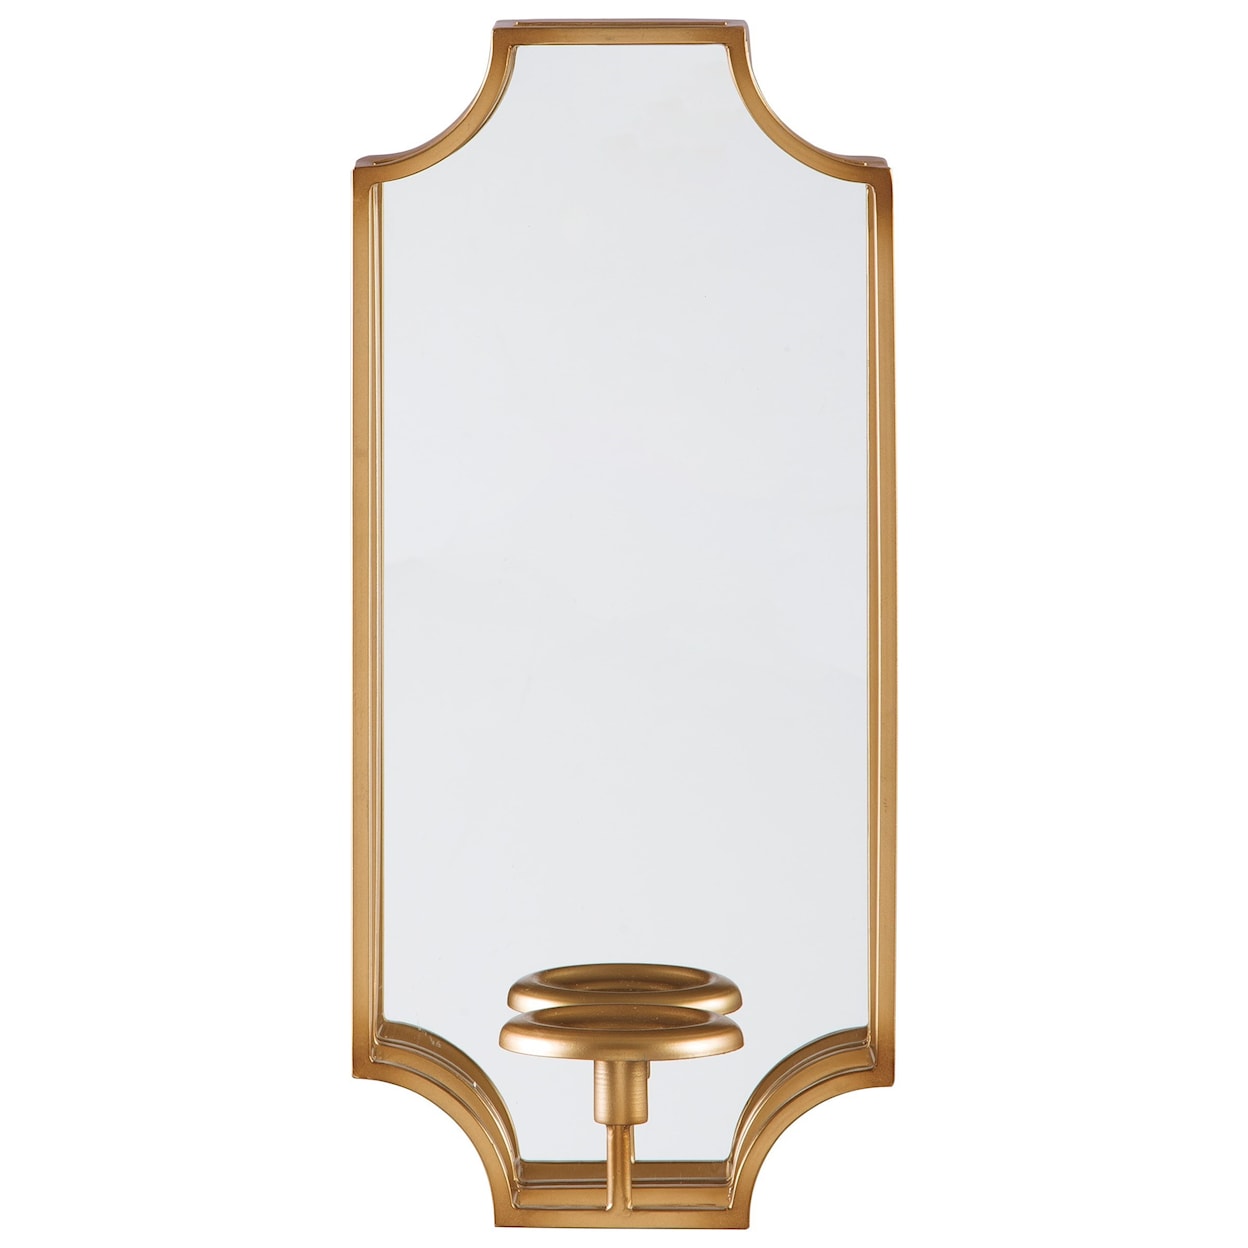 Ashley Signature Design Accent Mirrors Dumi Gold Finish Wall Sconce